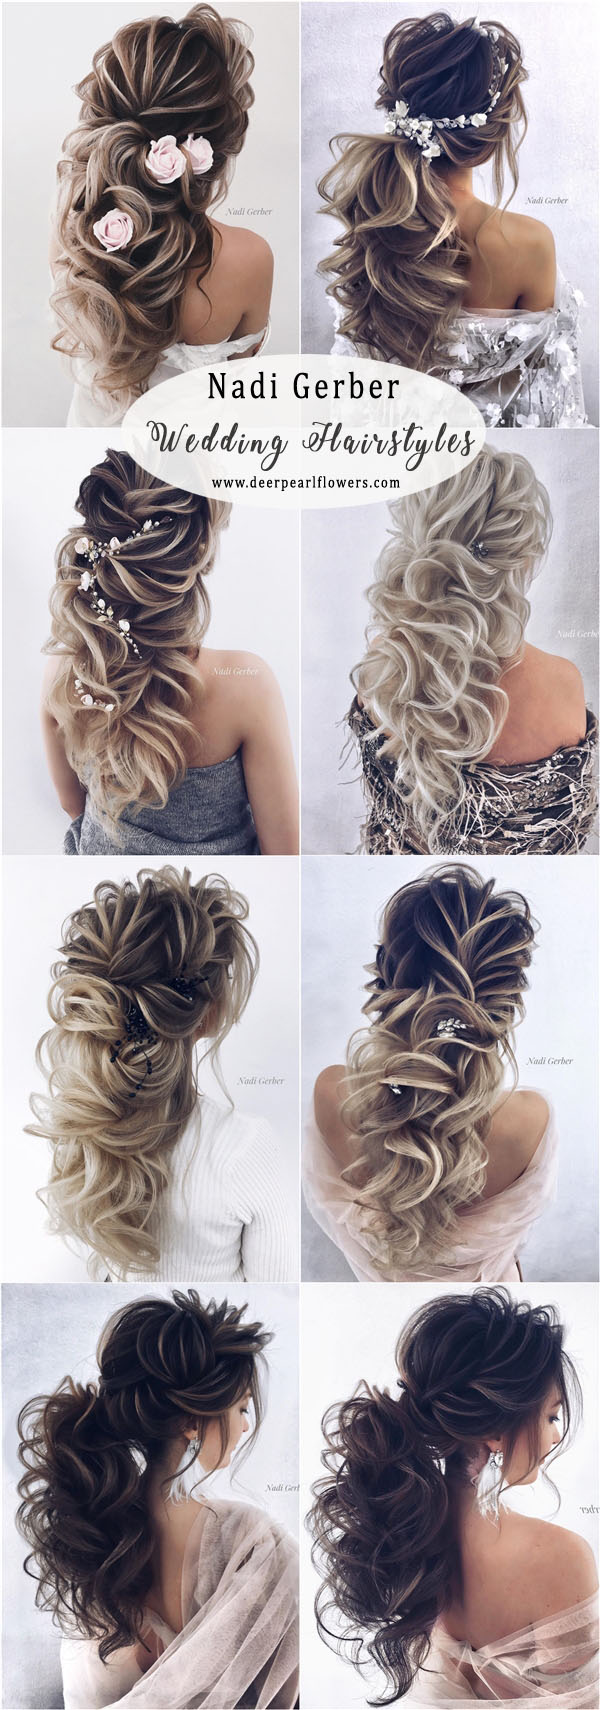 long wavy wedding hairstyles from Nadi Gerber